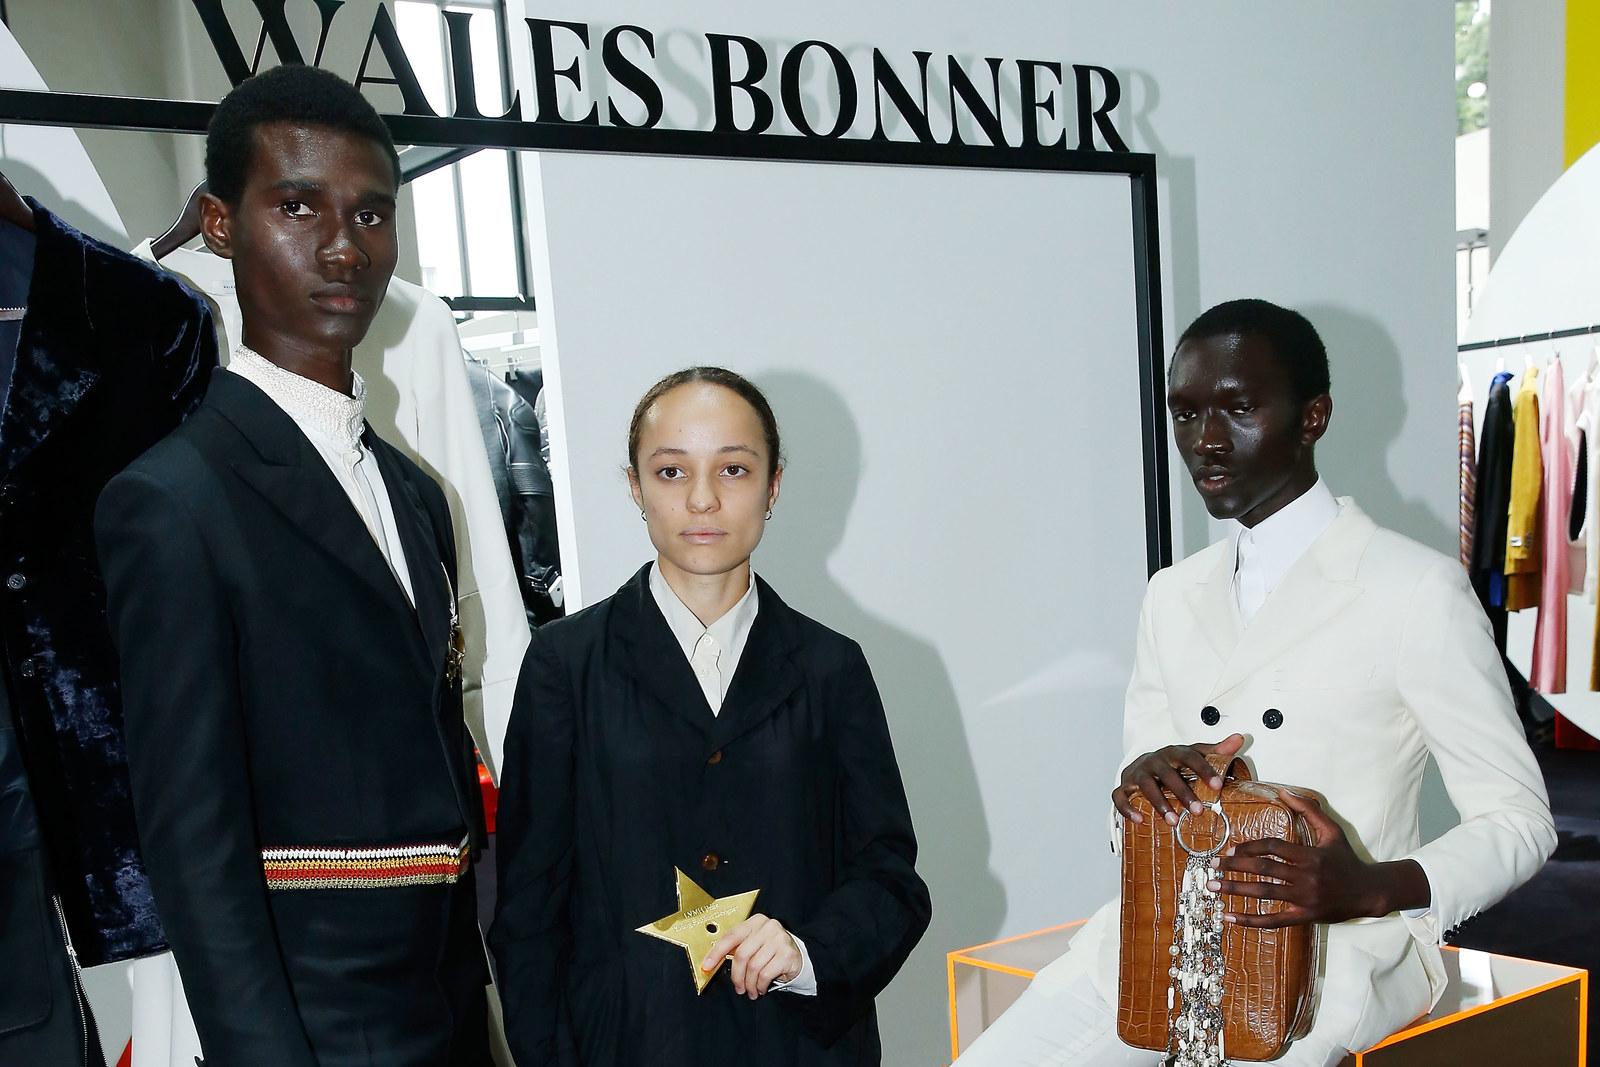 Who Is Grace Wales Bonner, Meghan Markle's Trench Dress Designer?